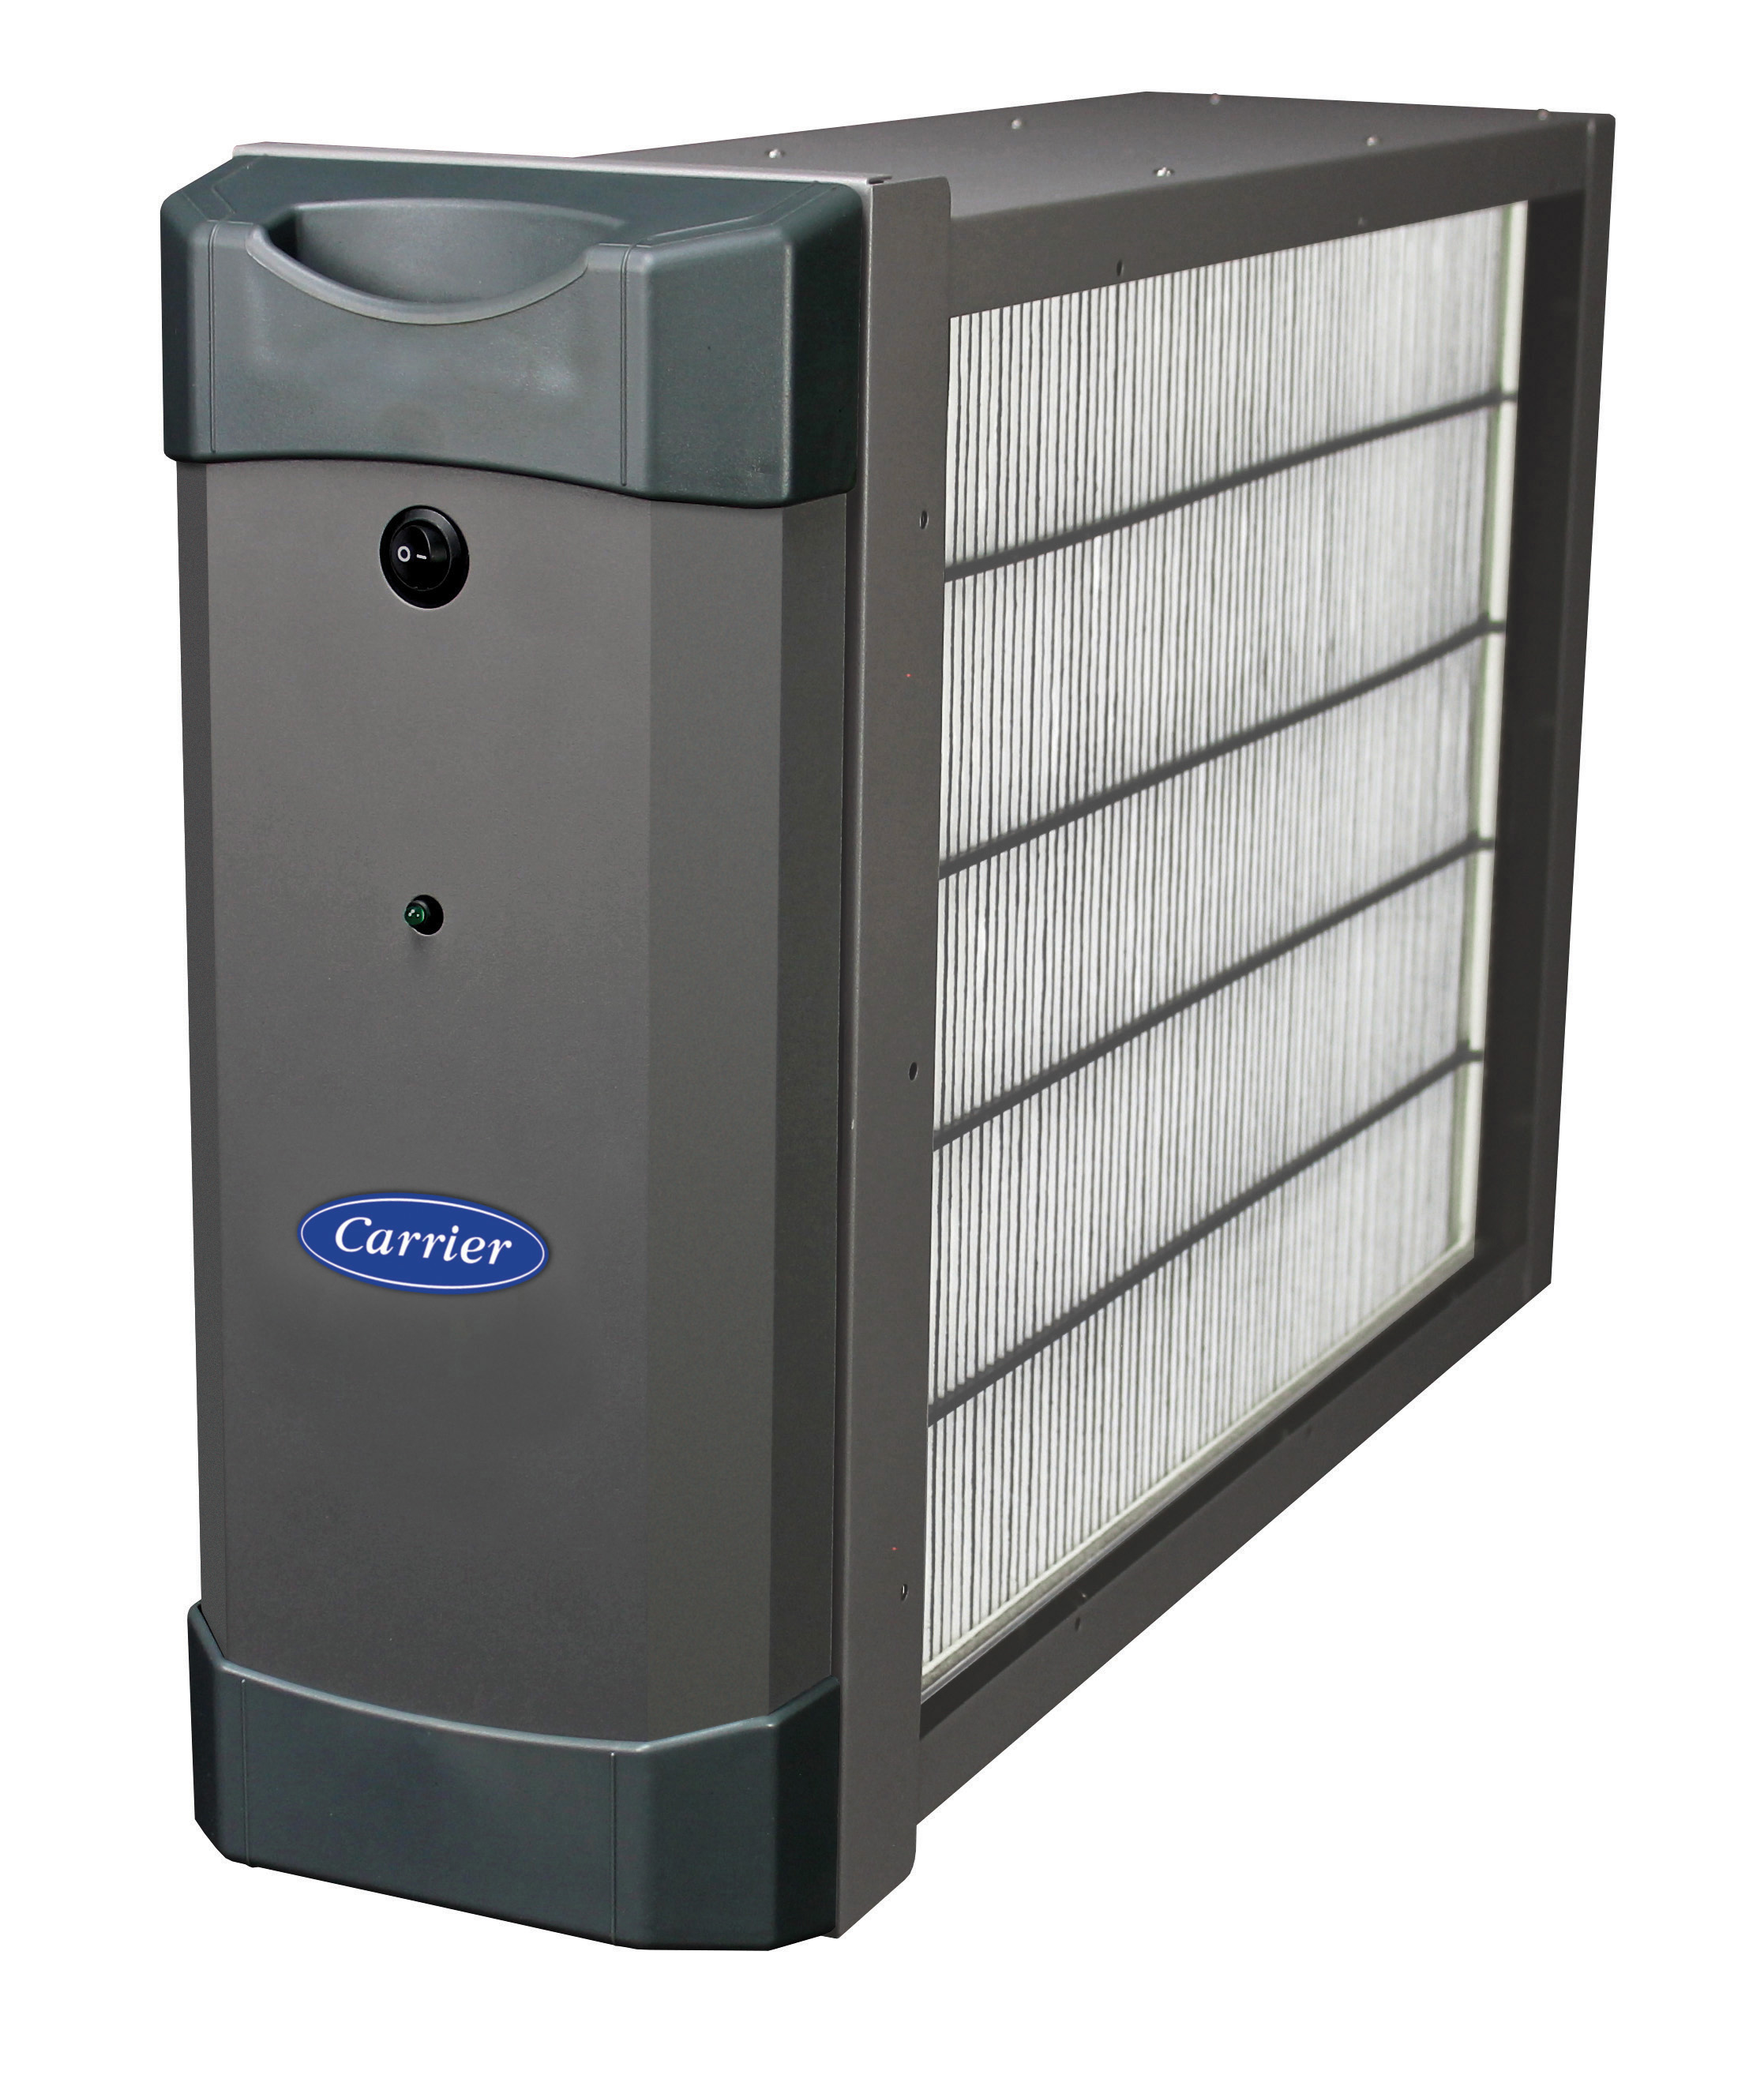 breath-easy-carrier-air-purifier-for-cleaner-air-all-seasons-inc